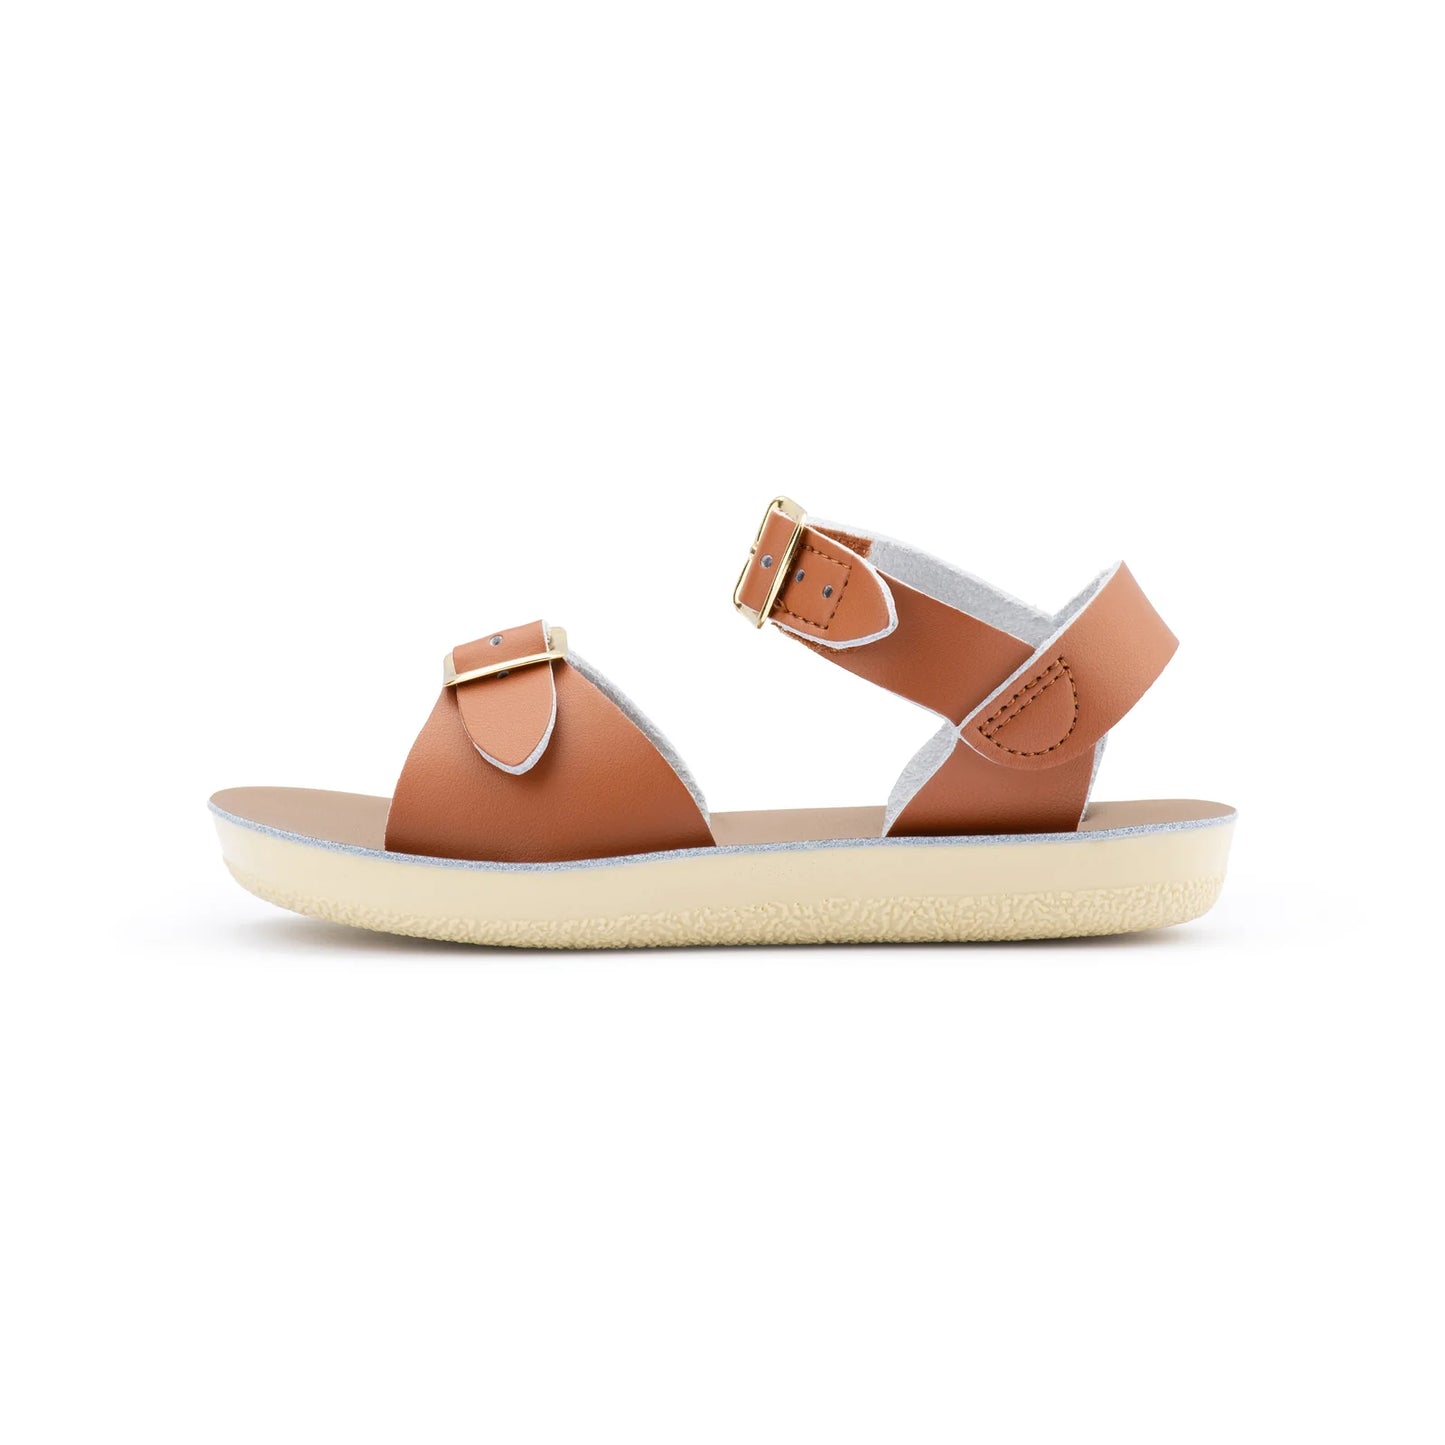 SURFER tan salt water sandal - SALT WATER - KIDS SANDAL - Stomp Shoes Darwin